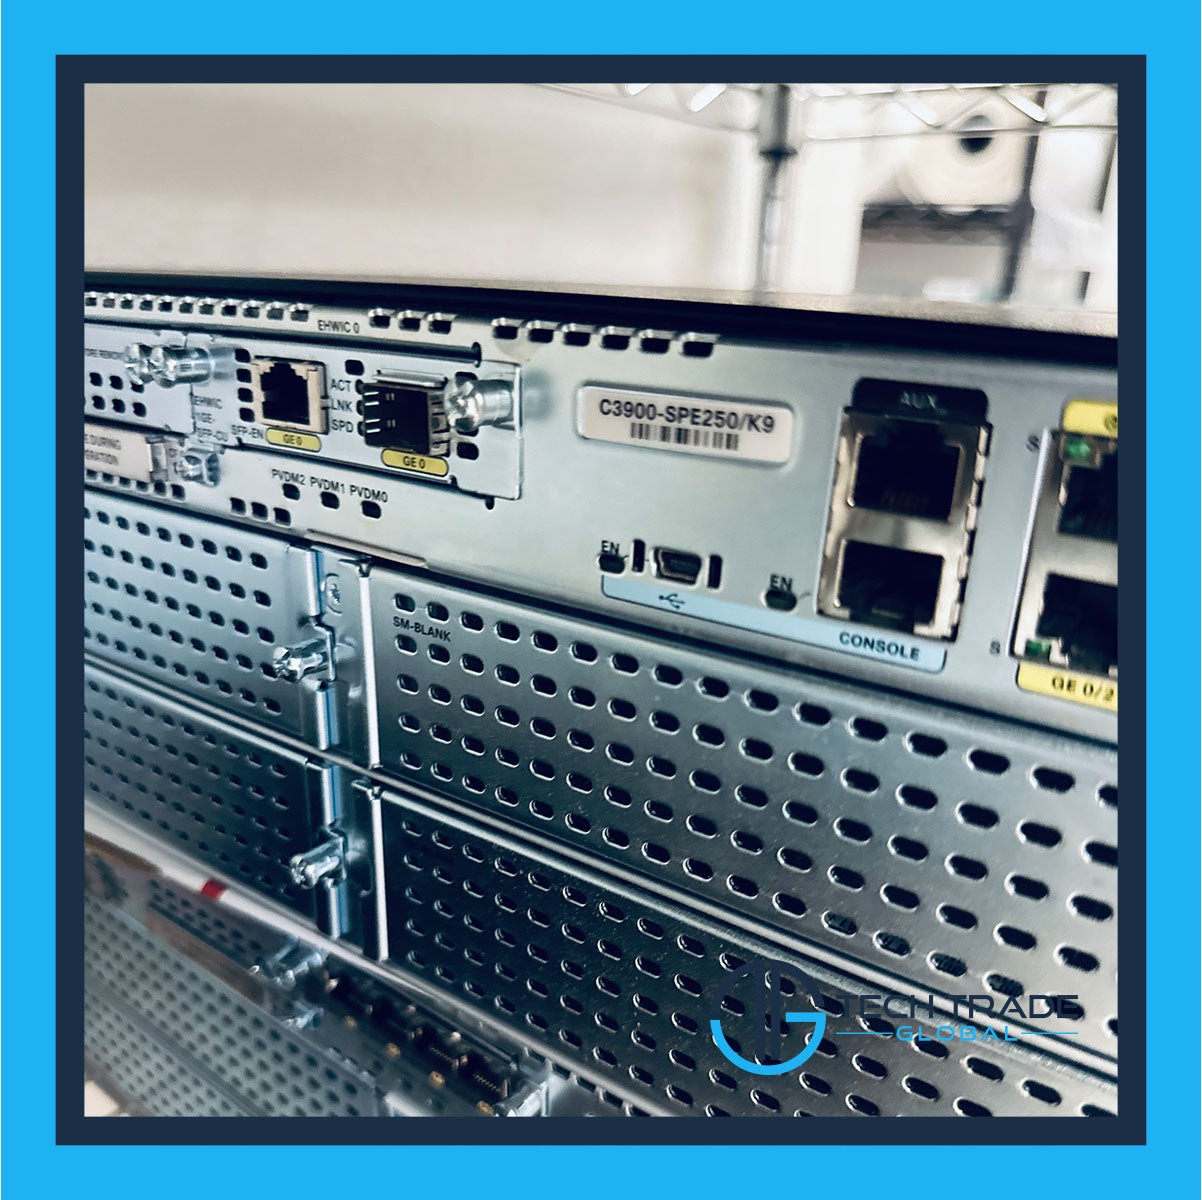 C3900-SPE150/K9 |  Cisco C3945 C3900-SPE150/K9 Integrated Services Router